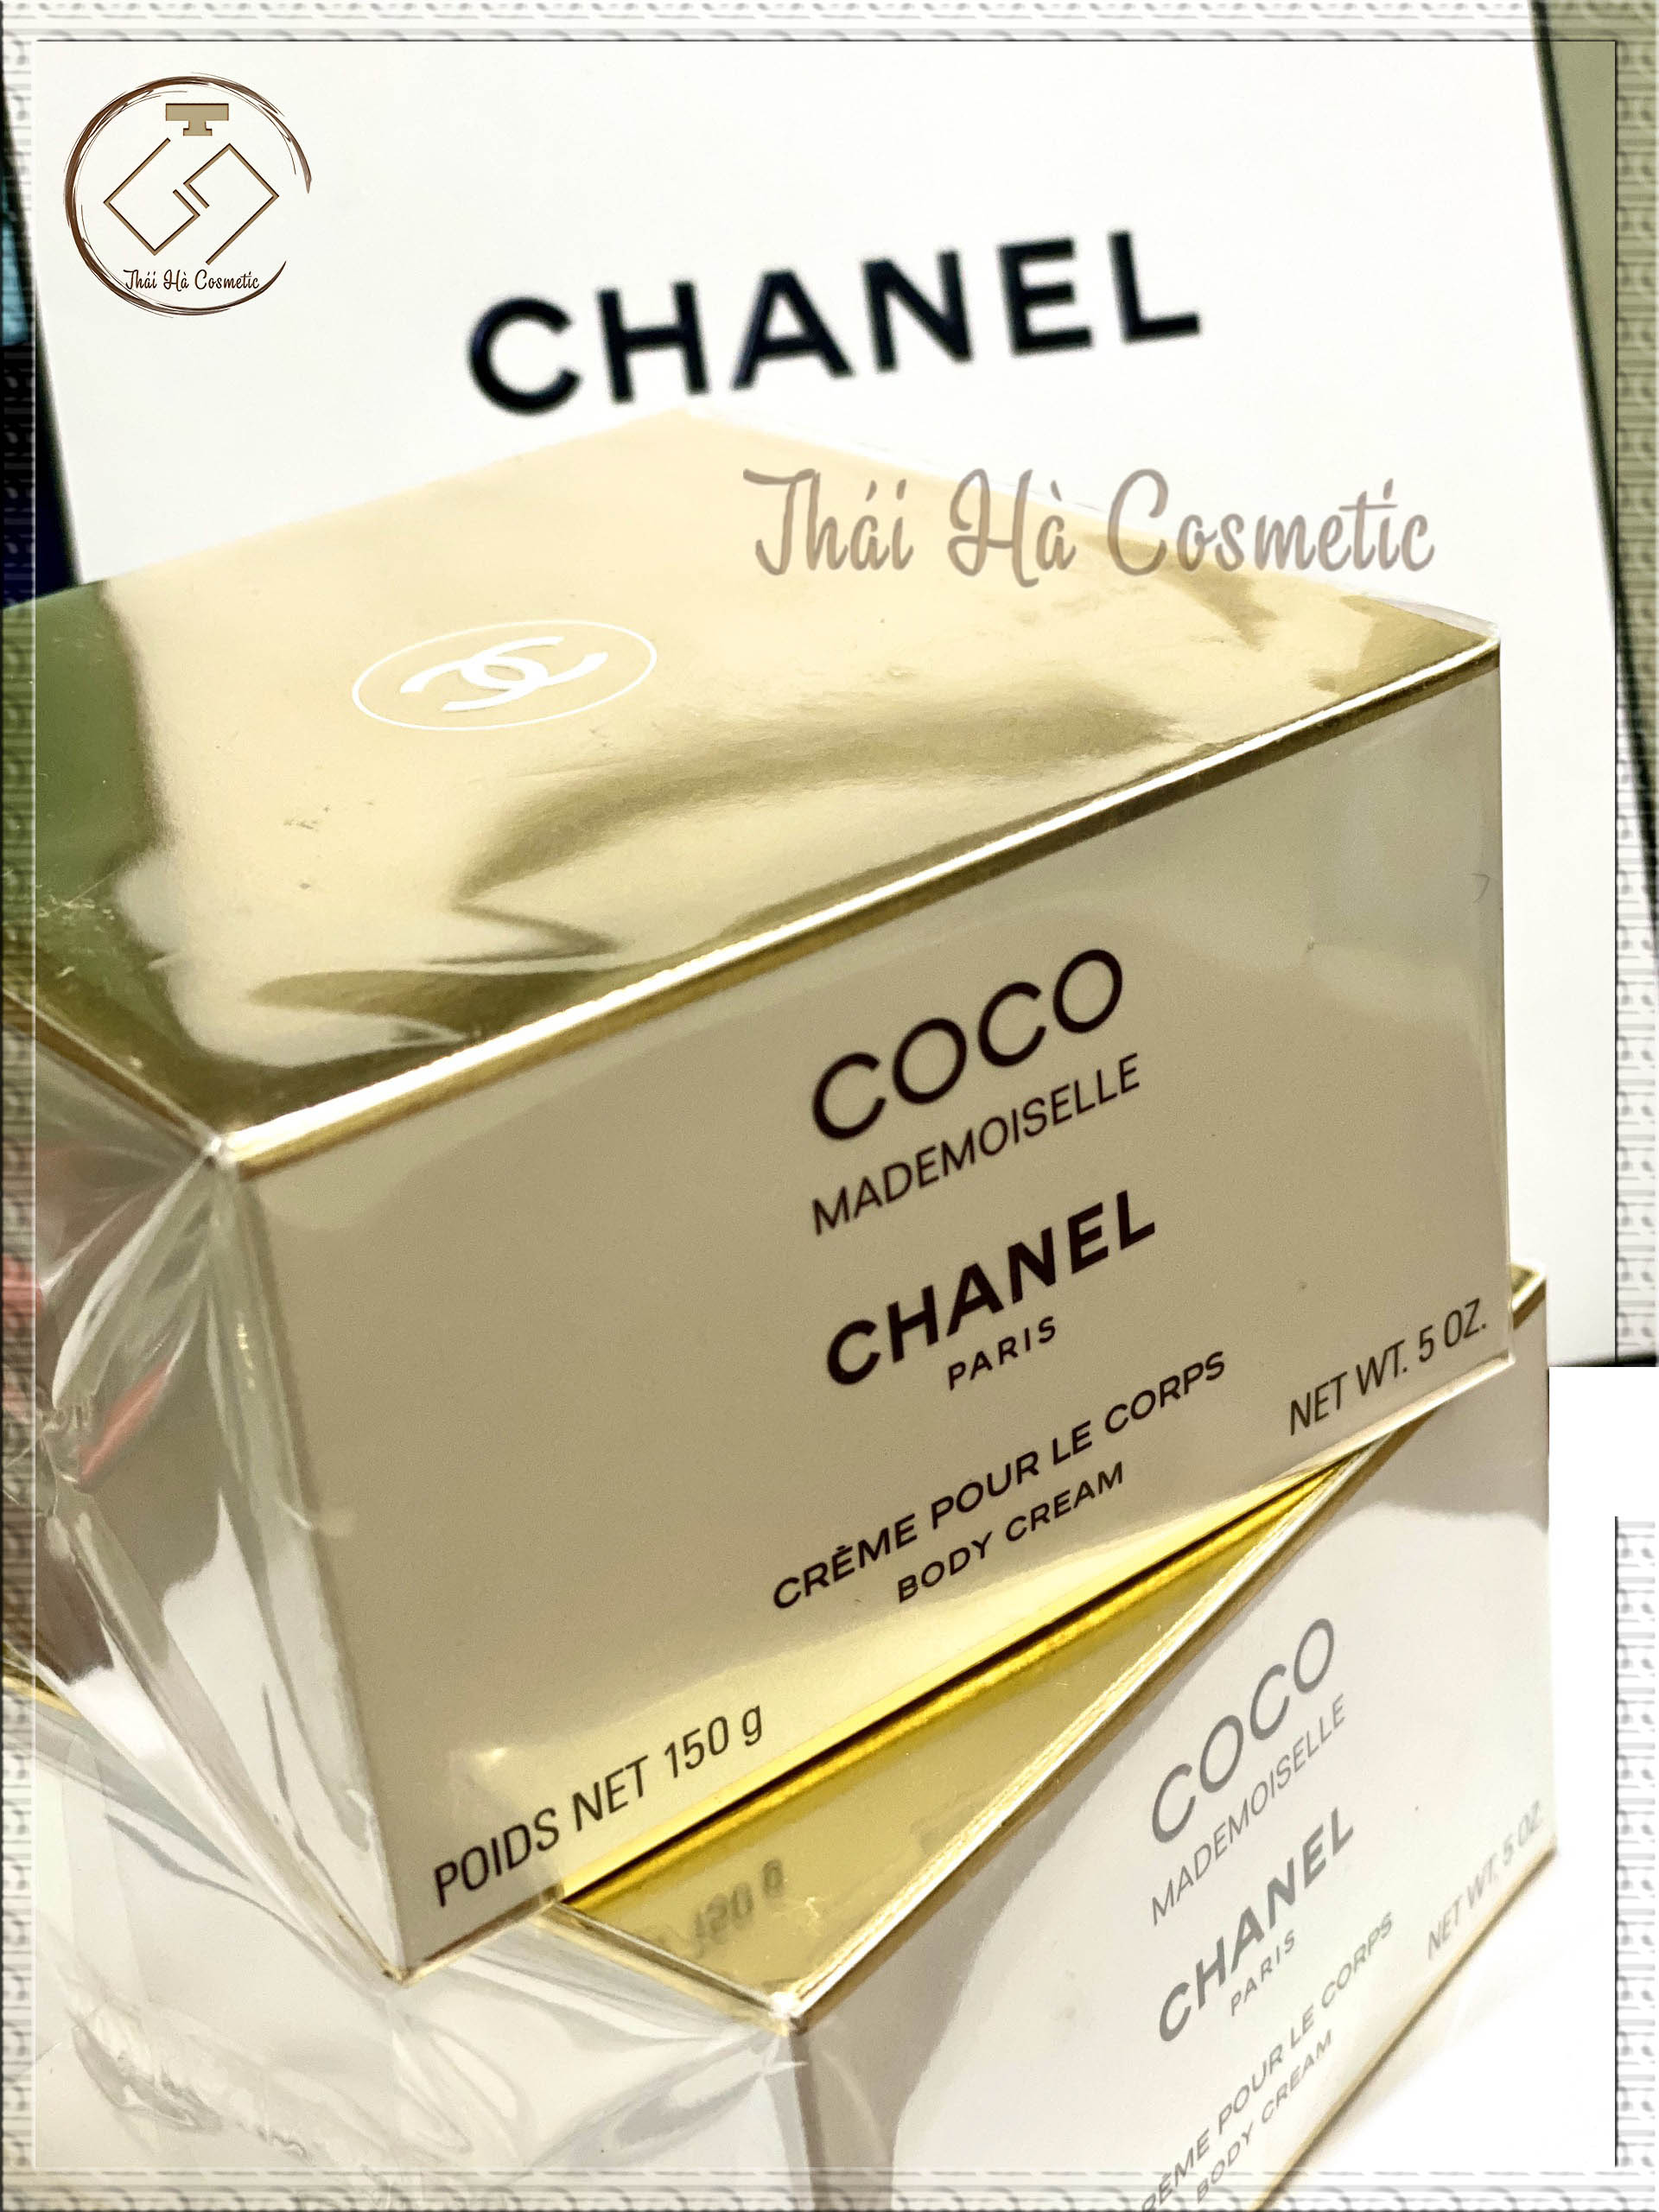 Kem dưỡng thể Chanel Coco Mademoiselle Body Cream 150g 